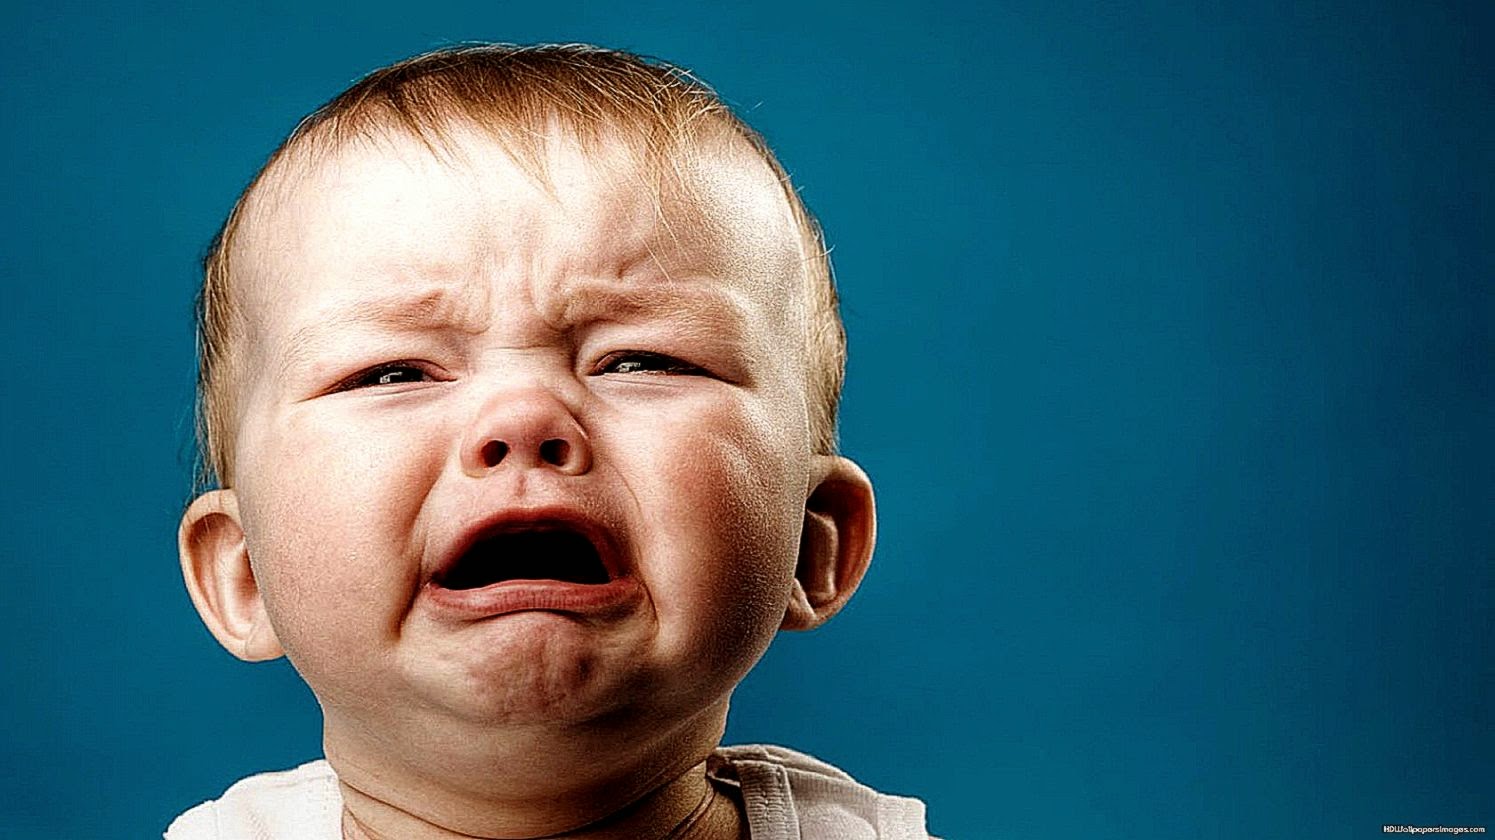 Cute Baby Boy Crying Hd Wallpaper For Desktop Background - Crying Baby Blue Background - HD Wallpaper 